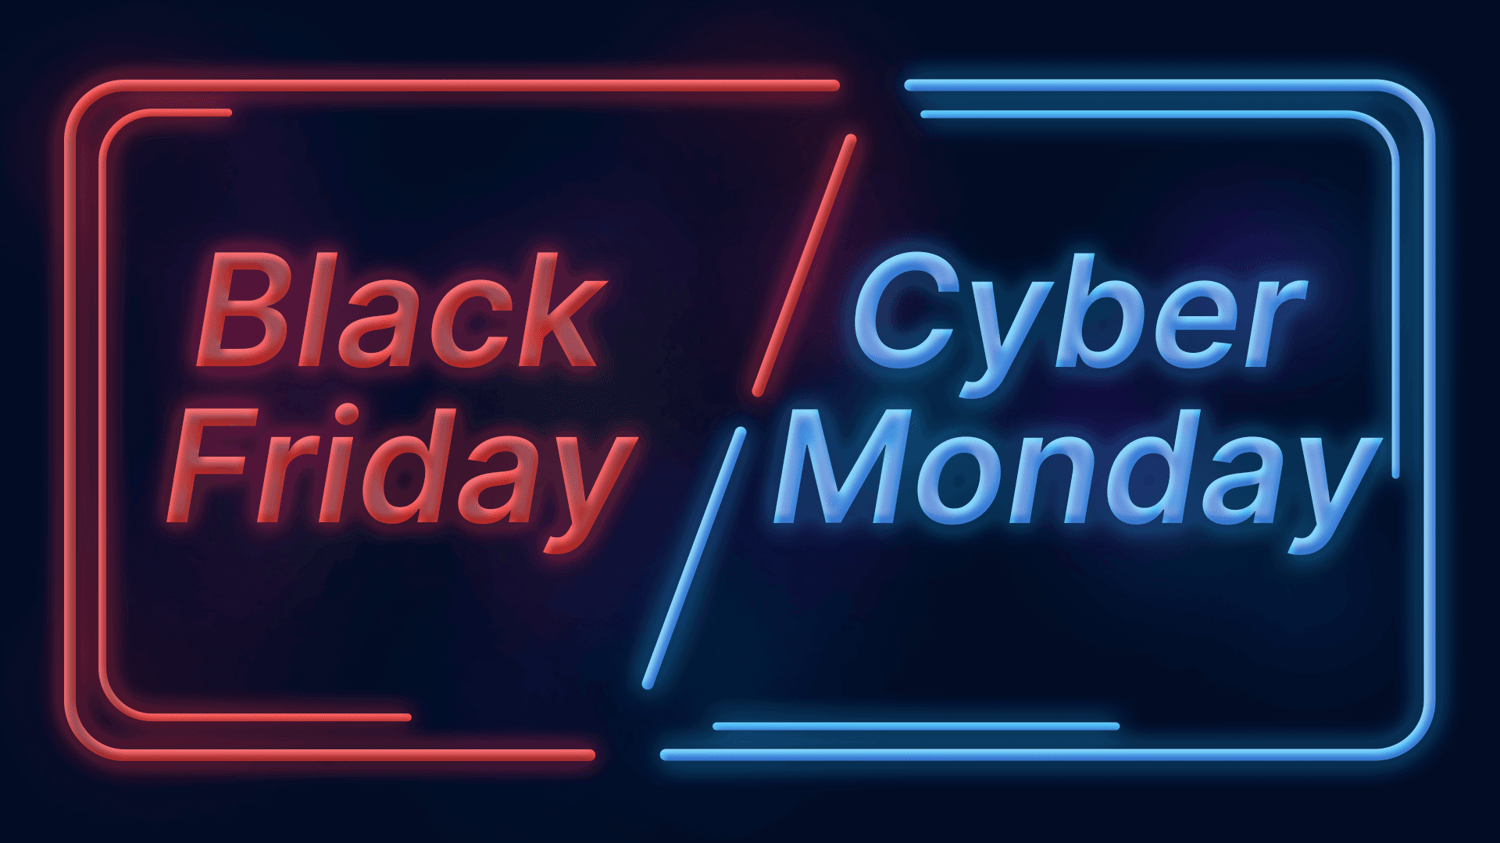 Offre Black Friday & Cyber Monday : économisez 53%